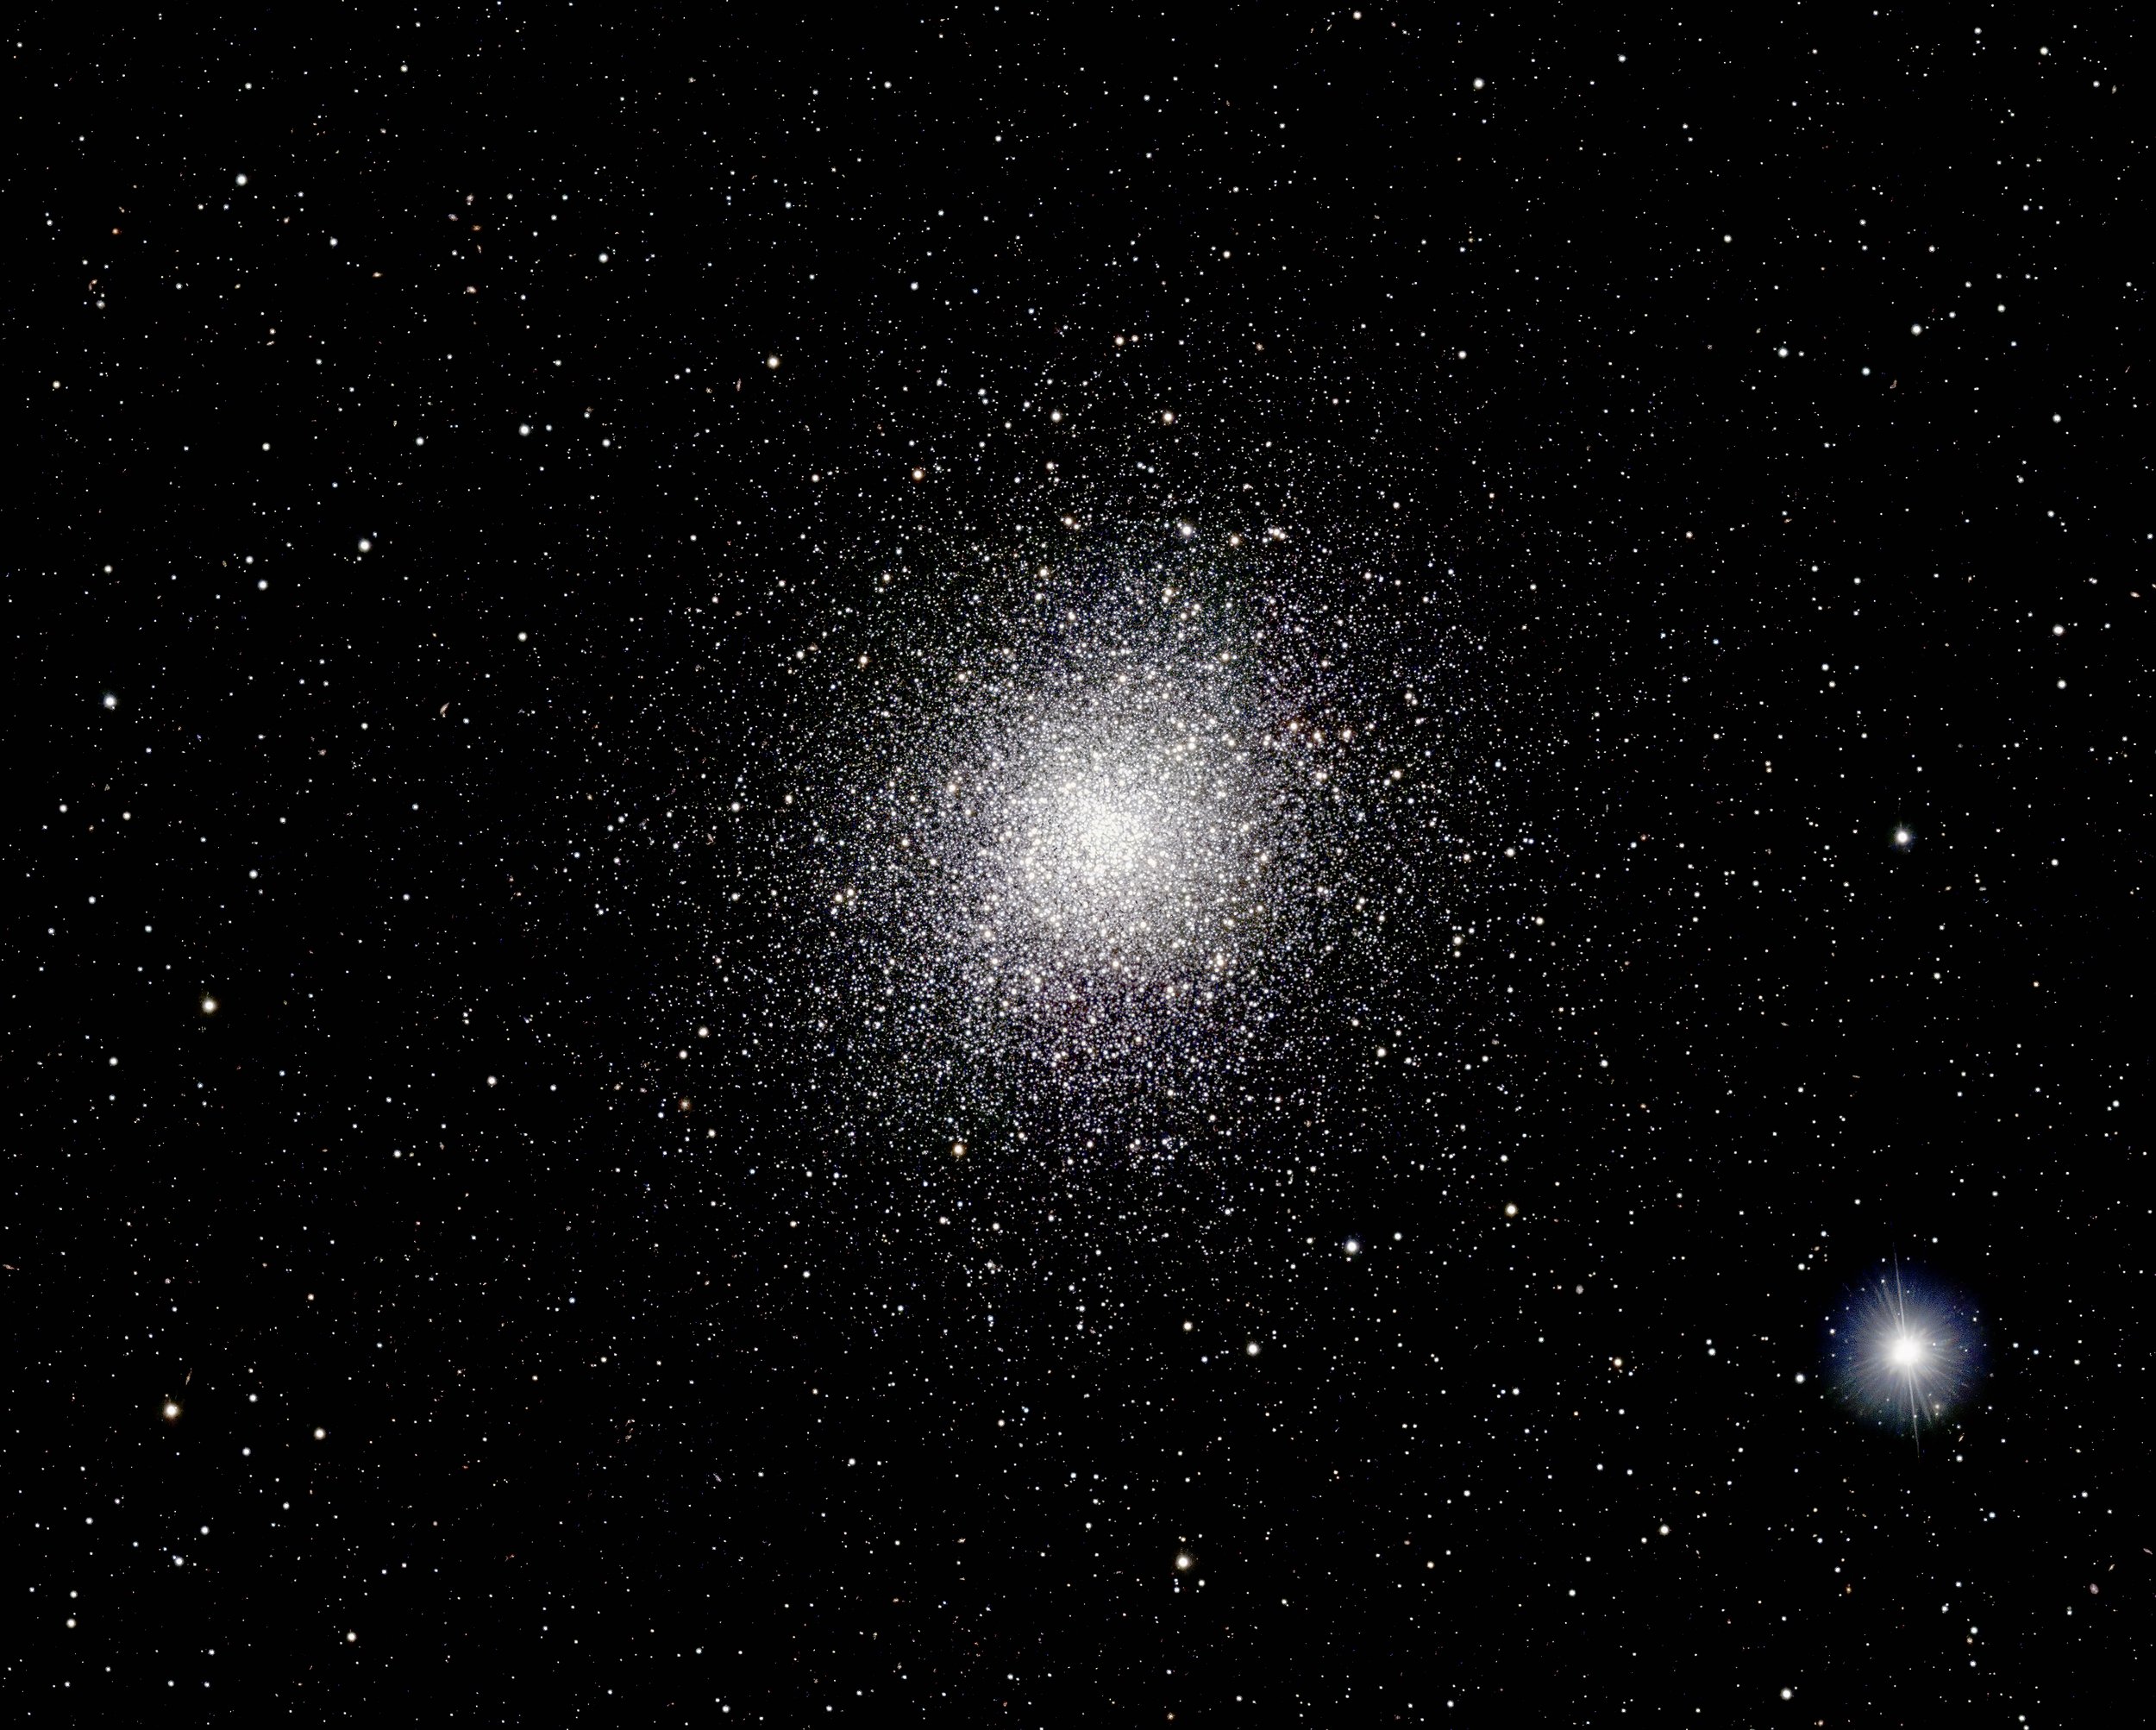 The Globular Cluster M5